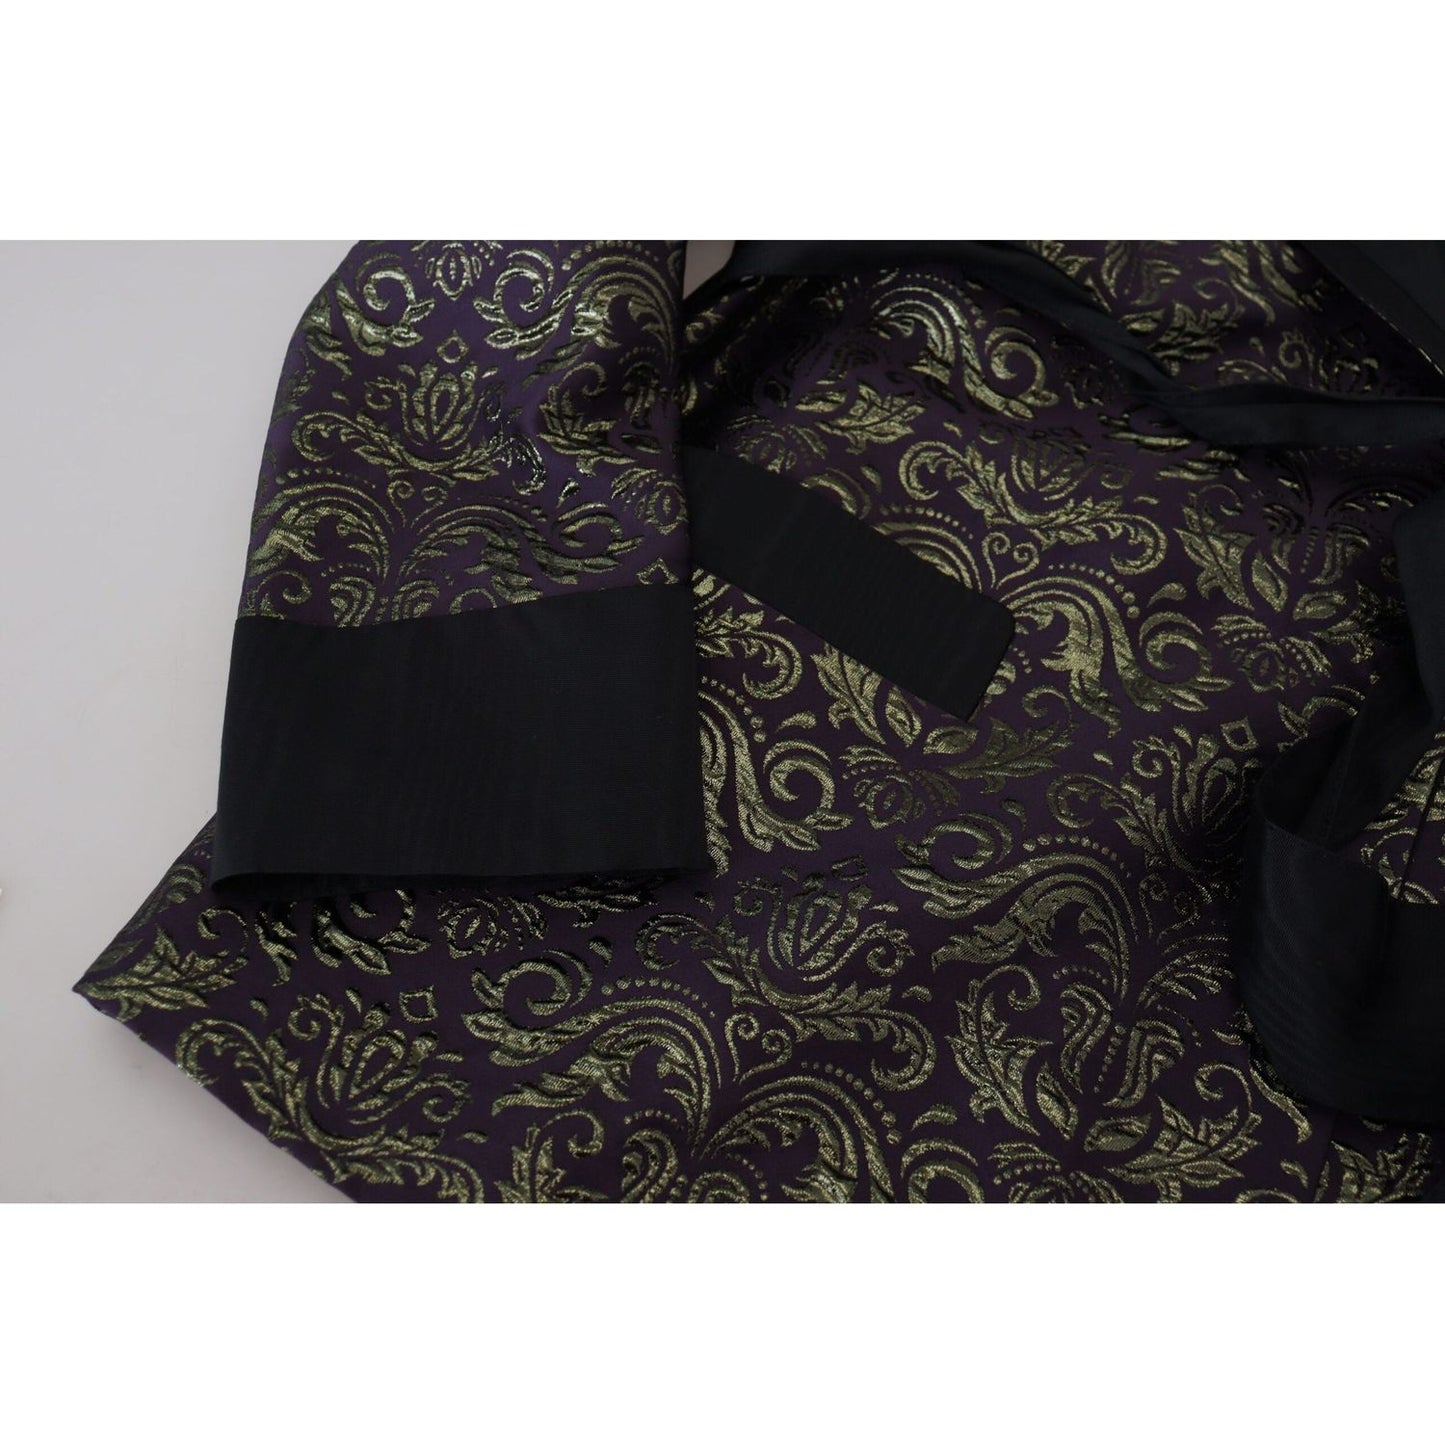 Dolce & Gabbana Gold Jacquard Robe Jacket gold-purple-baroque-jacket-blazer-robe IMG_9639-scaled-ccb41ecc-37c.jpg